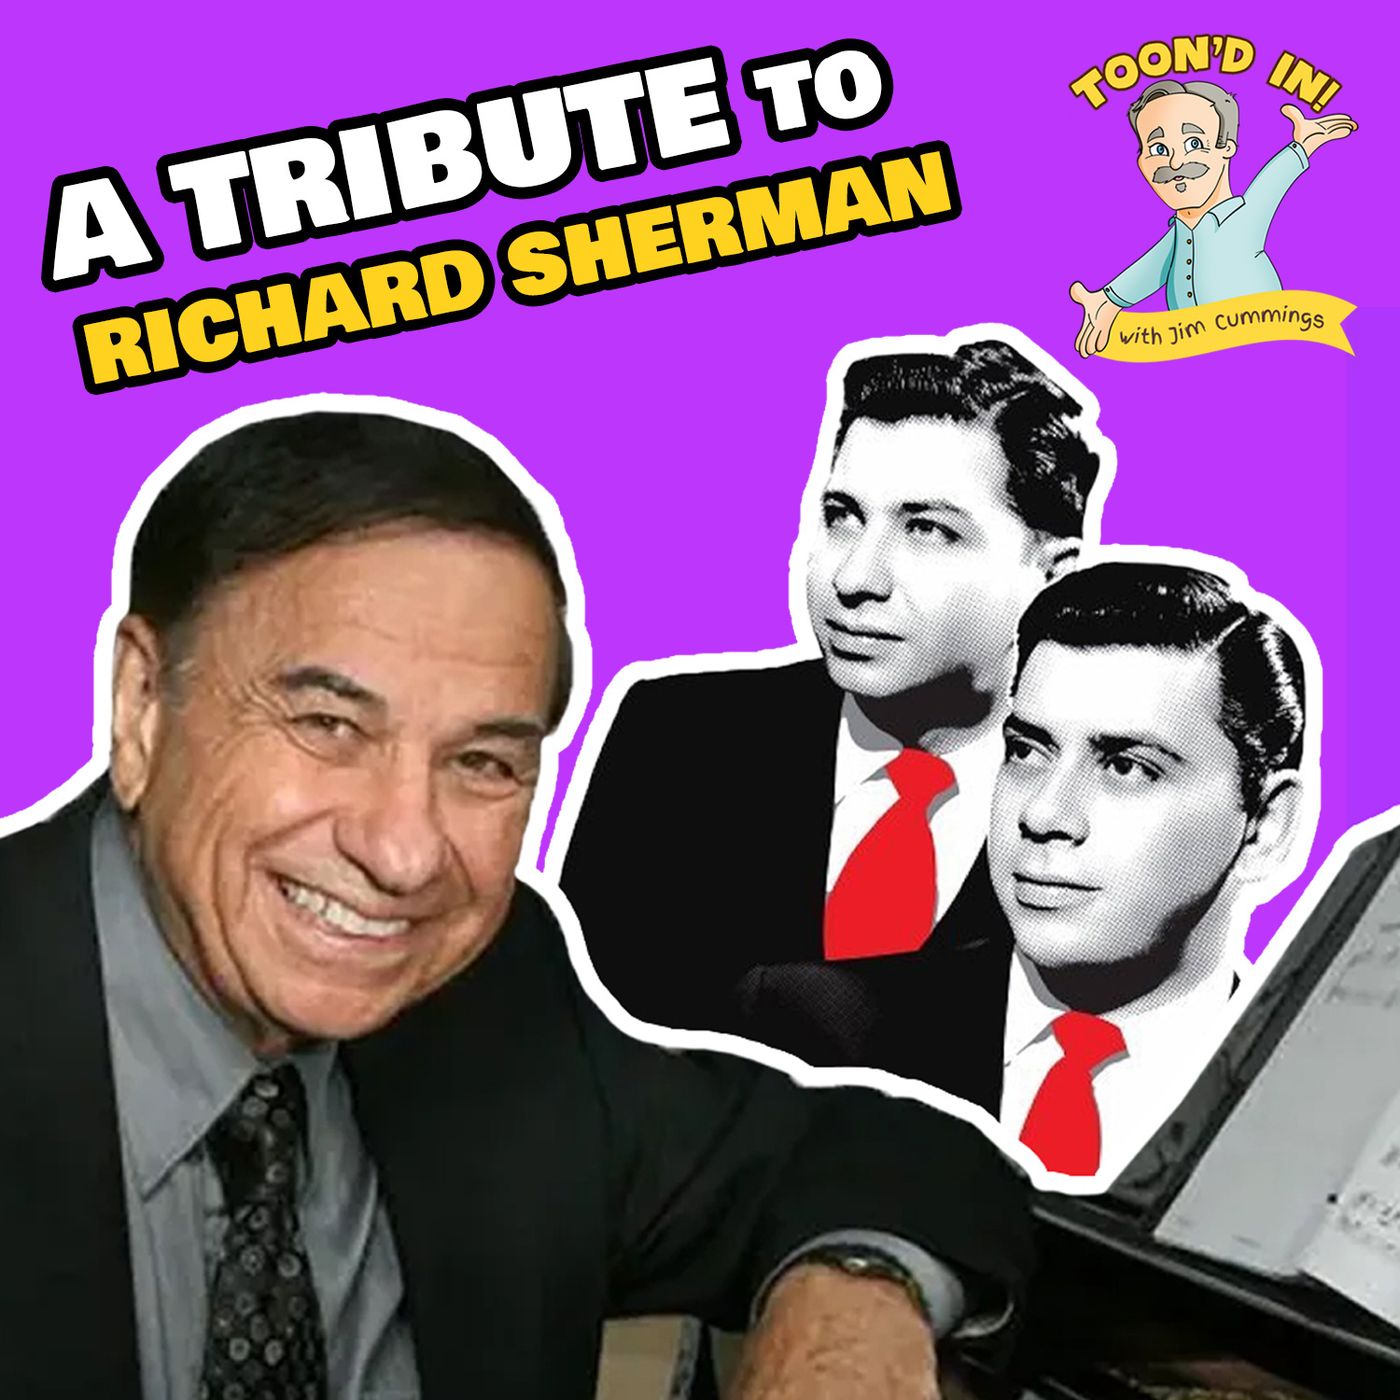 Remembering Richard Sherman